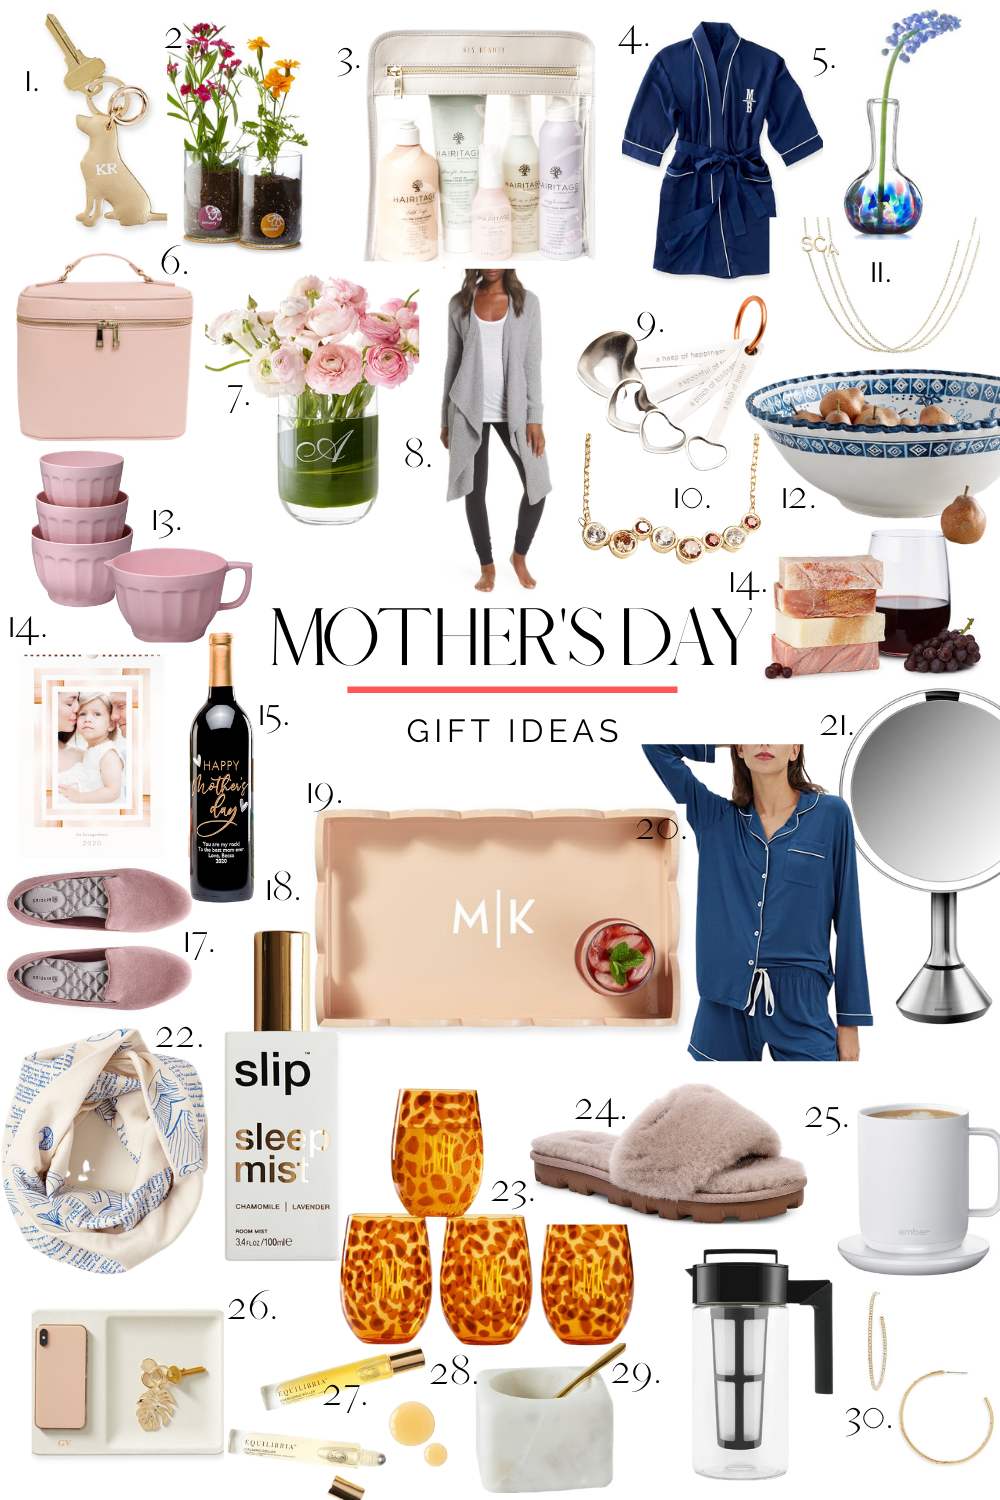 Mother's Day Gift Guide 2022 - Chris Loves Julia